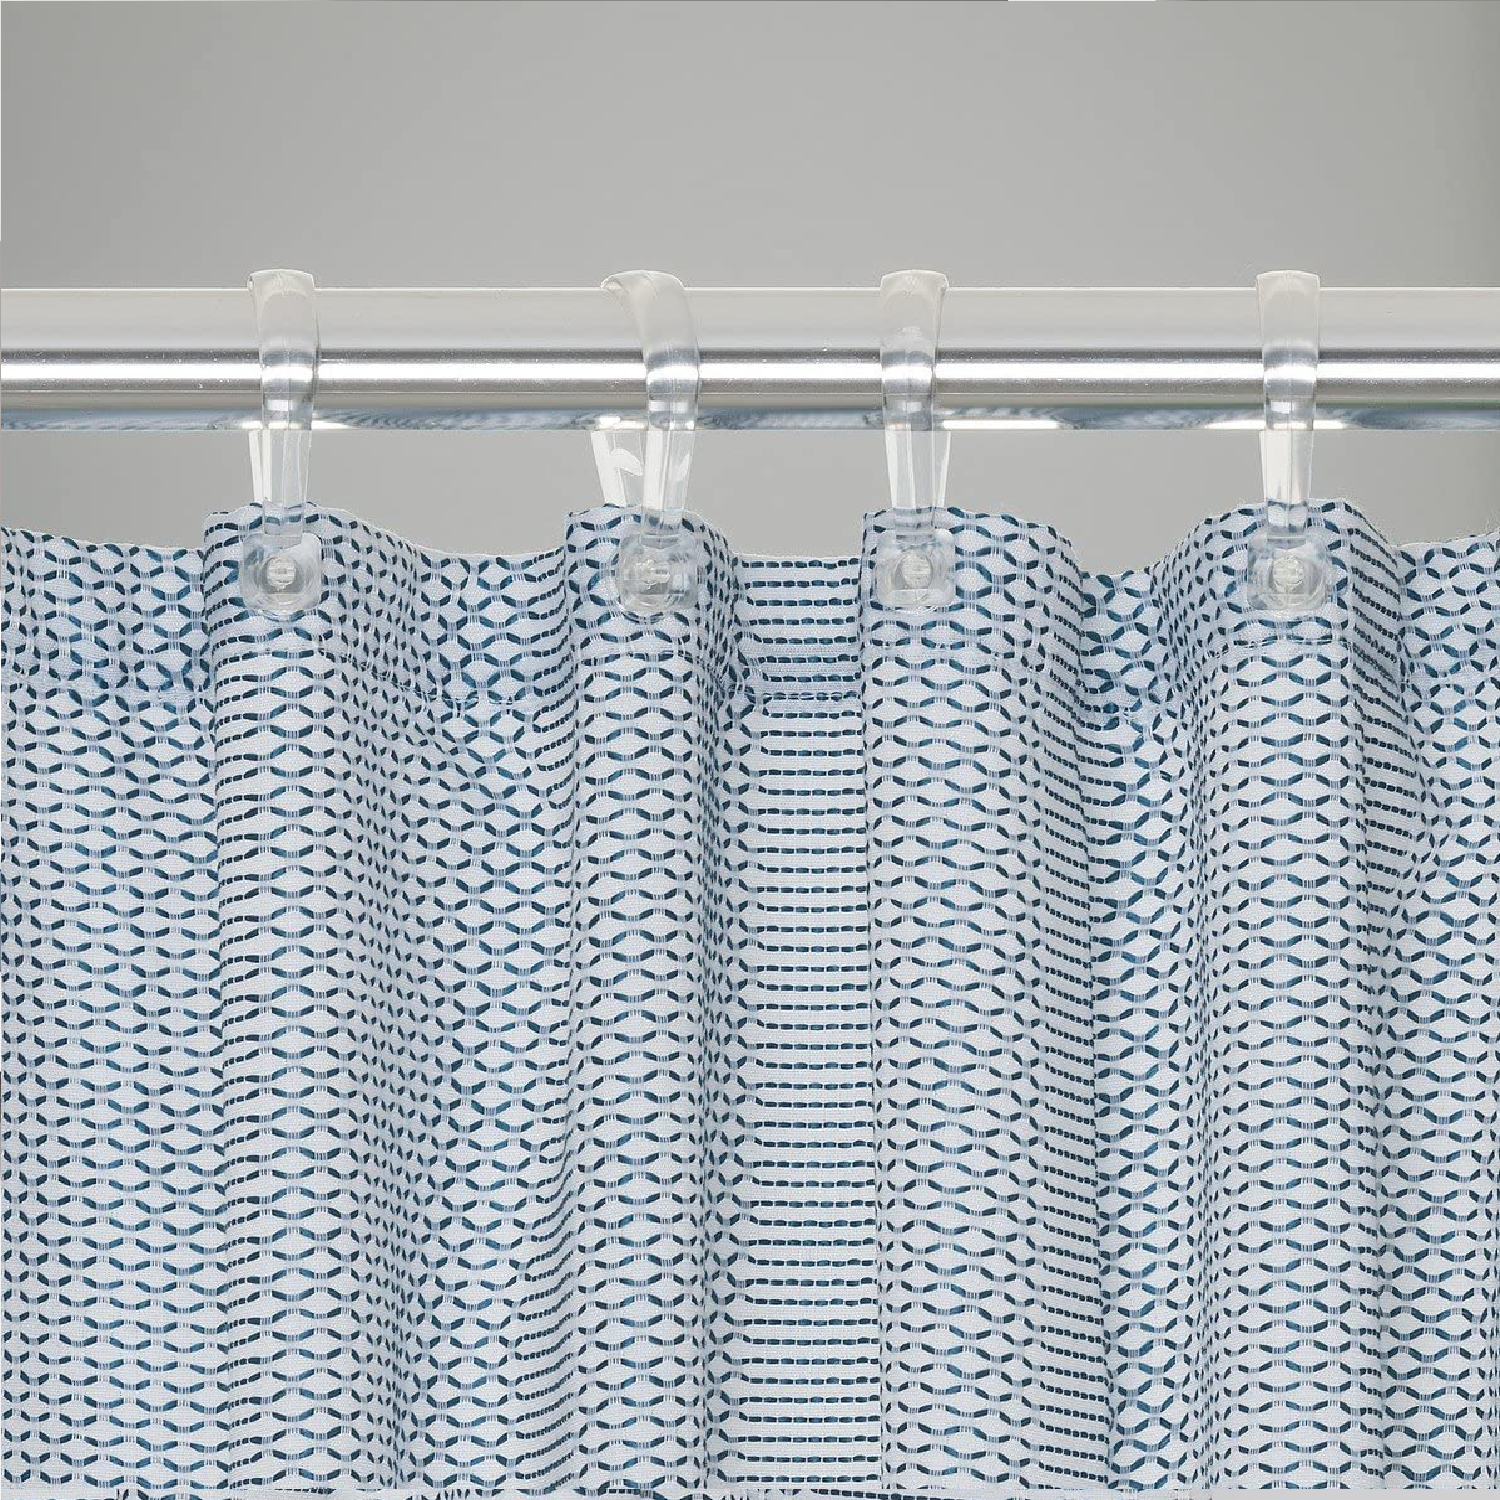 Textil Duschvorhang Wave, Polyester, Farbe: Blau, B x H: 180 x 200 cm